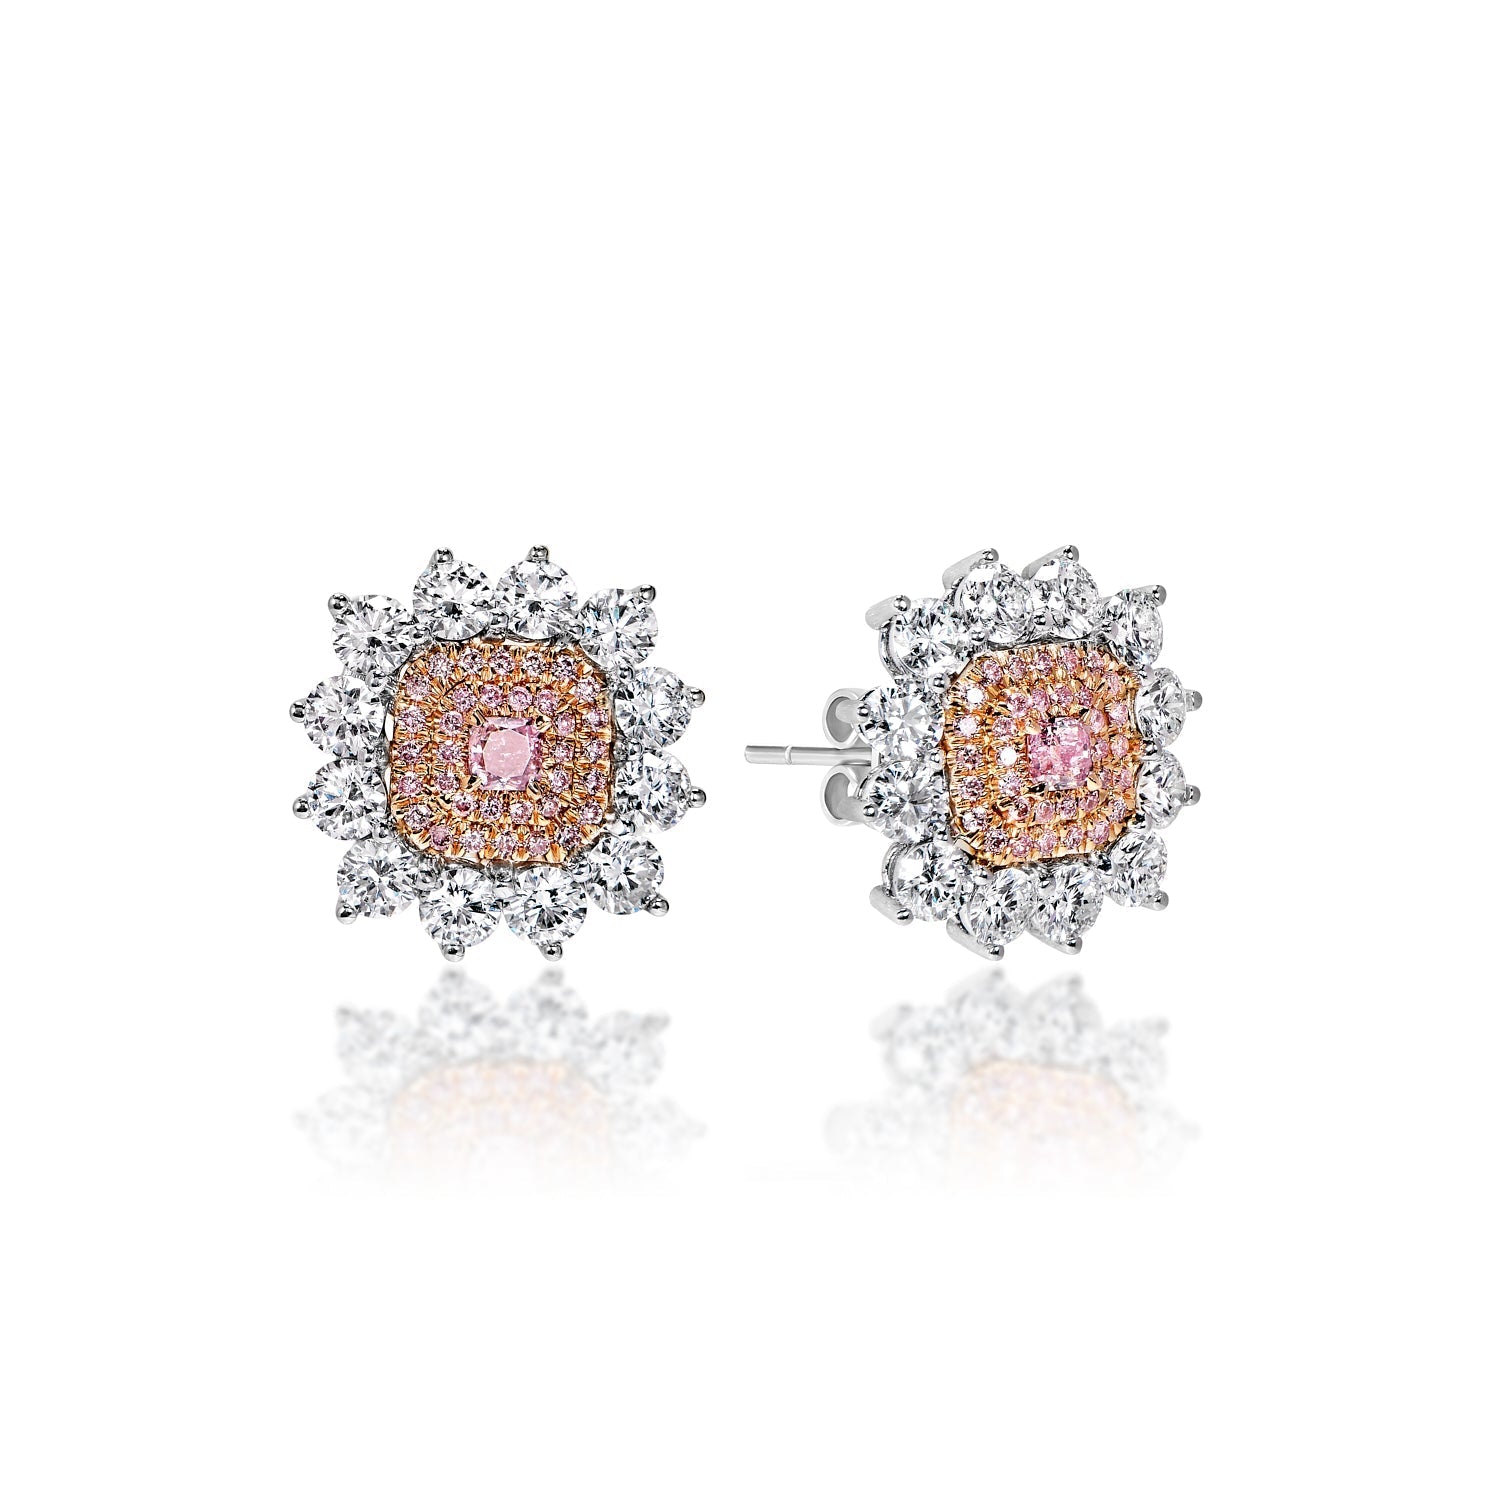 Sara 4 Carat Fancy Intense Purplish Pink Radiant Cut Diamond Stud Earrings in 18k White Gold Front and Side View